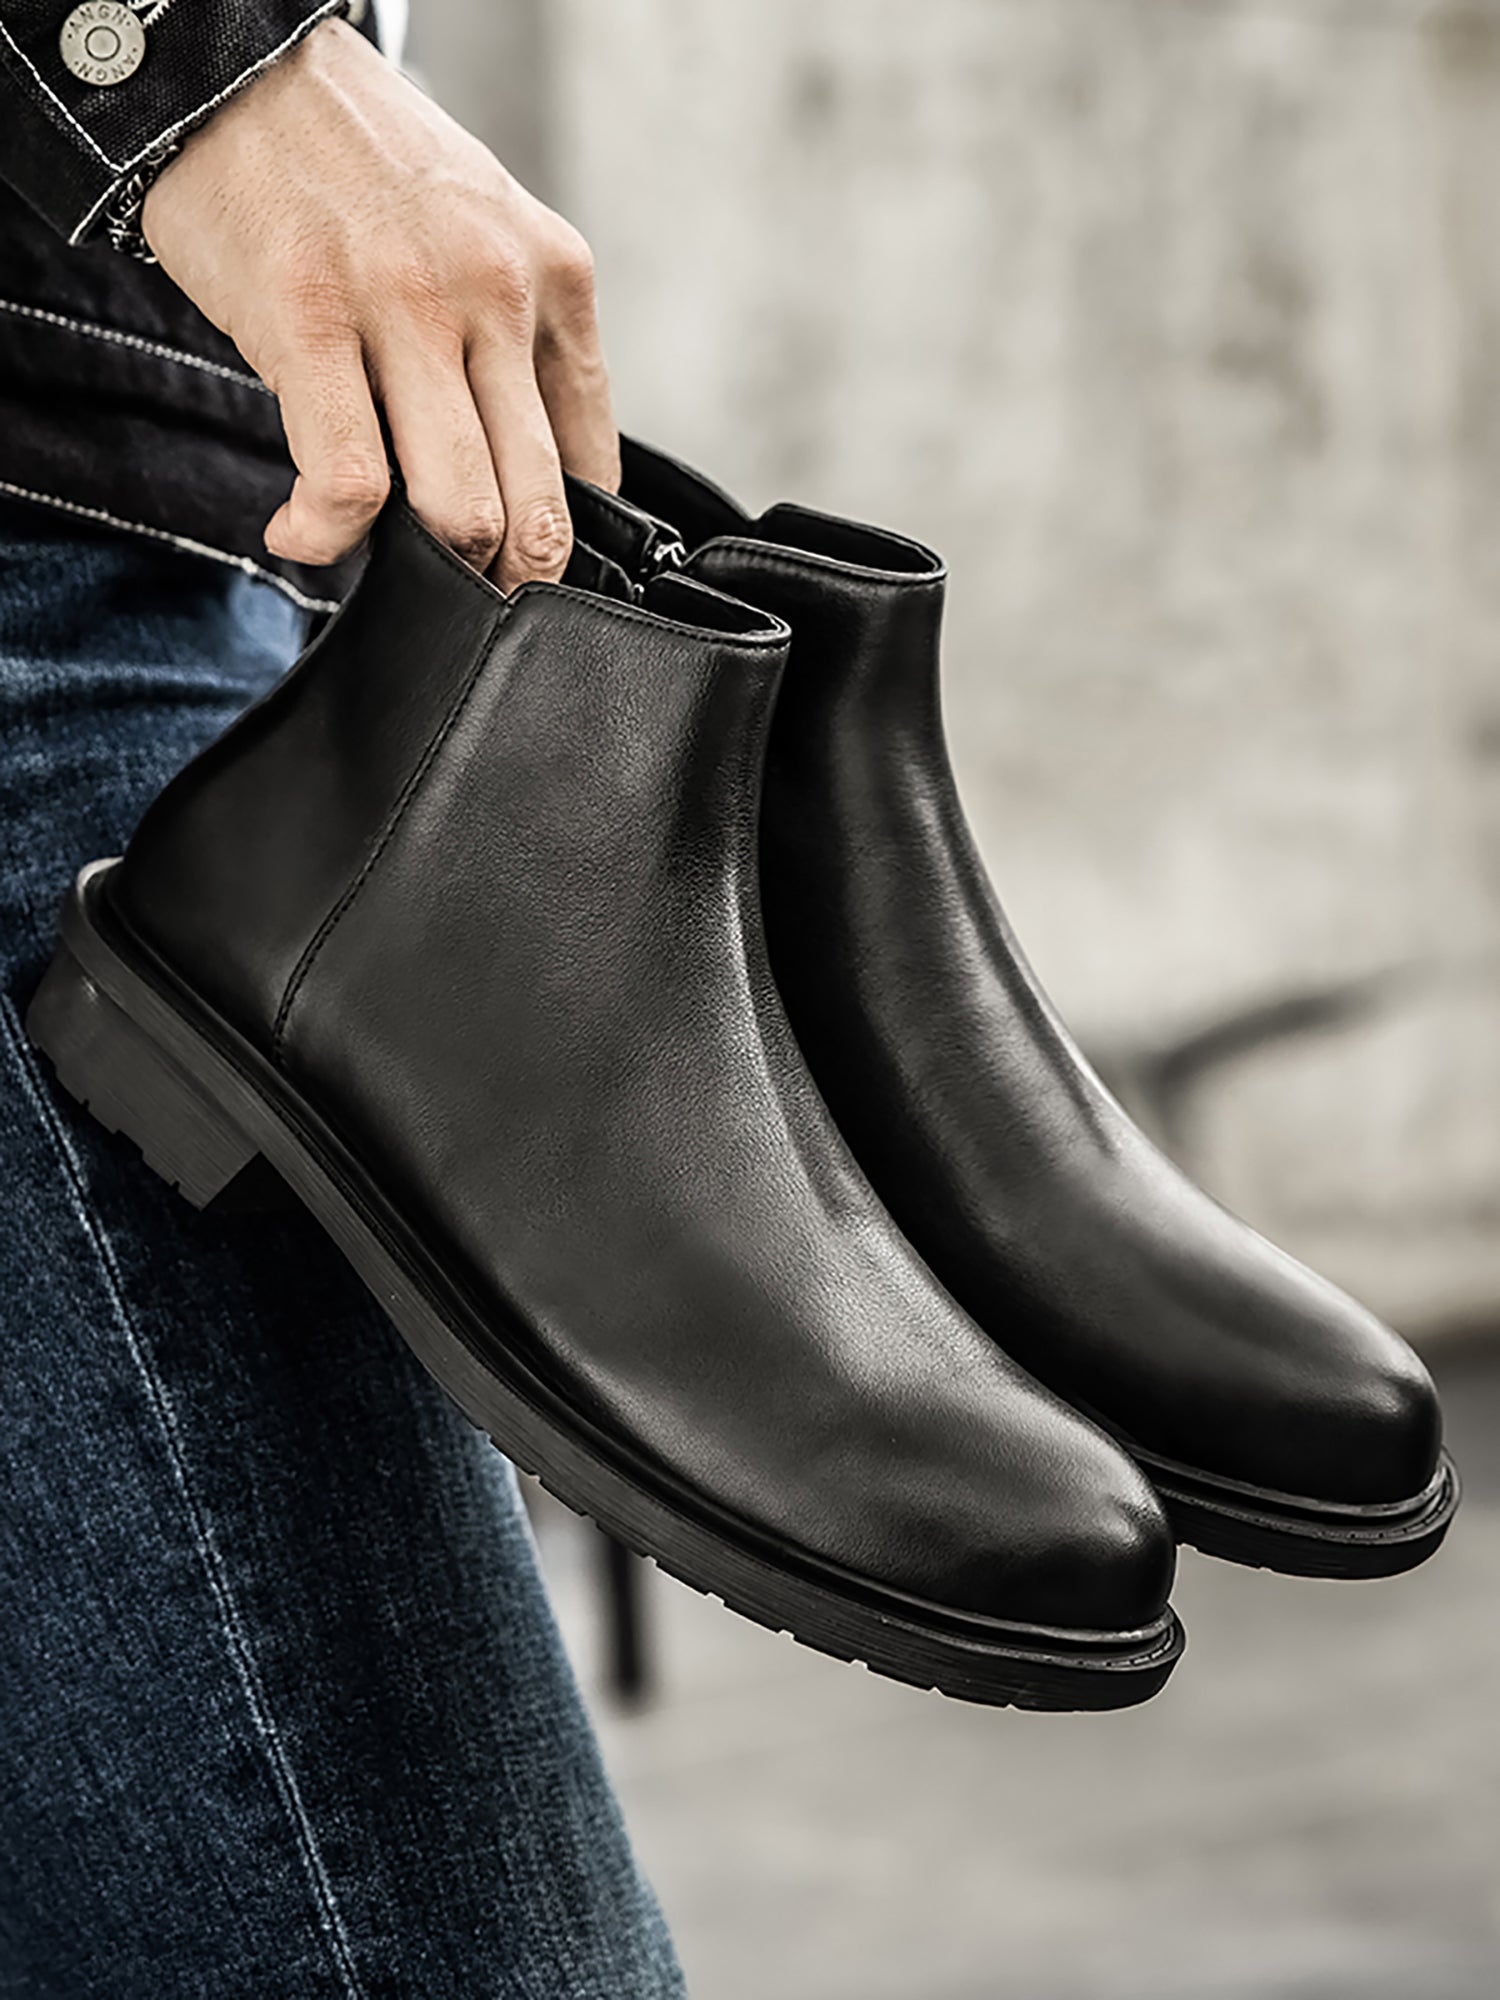 Men's  Chelsea Boots Genuine Leather